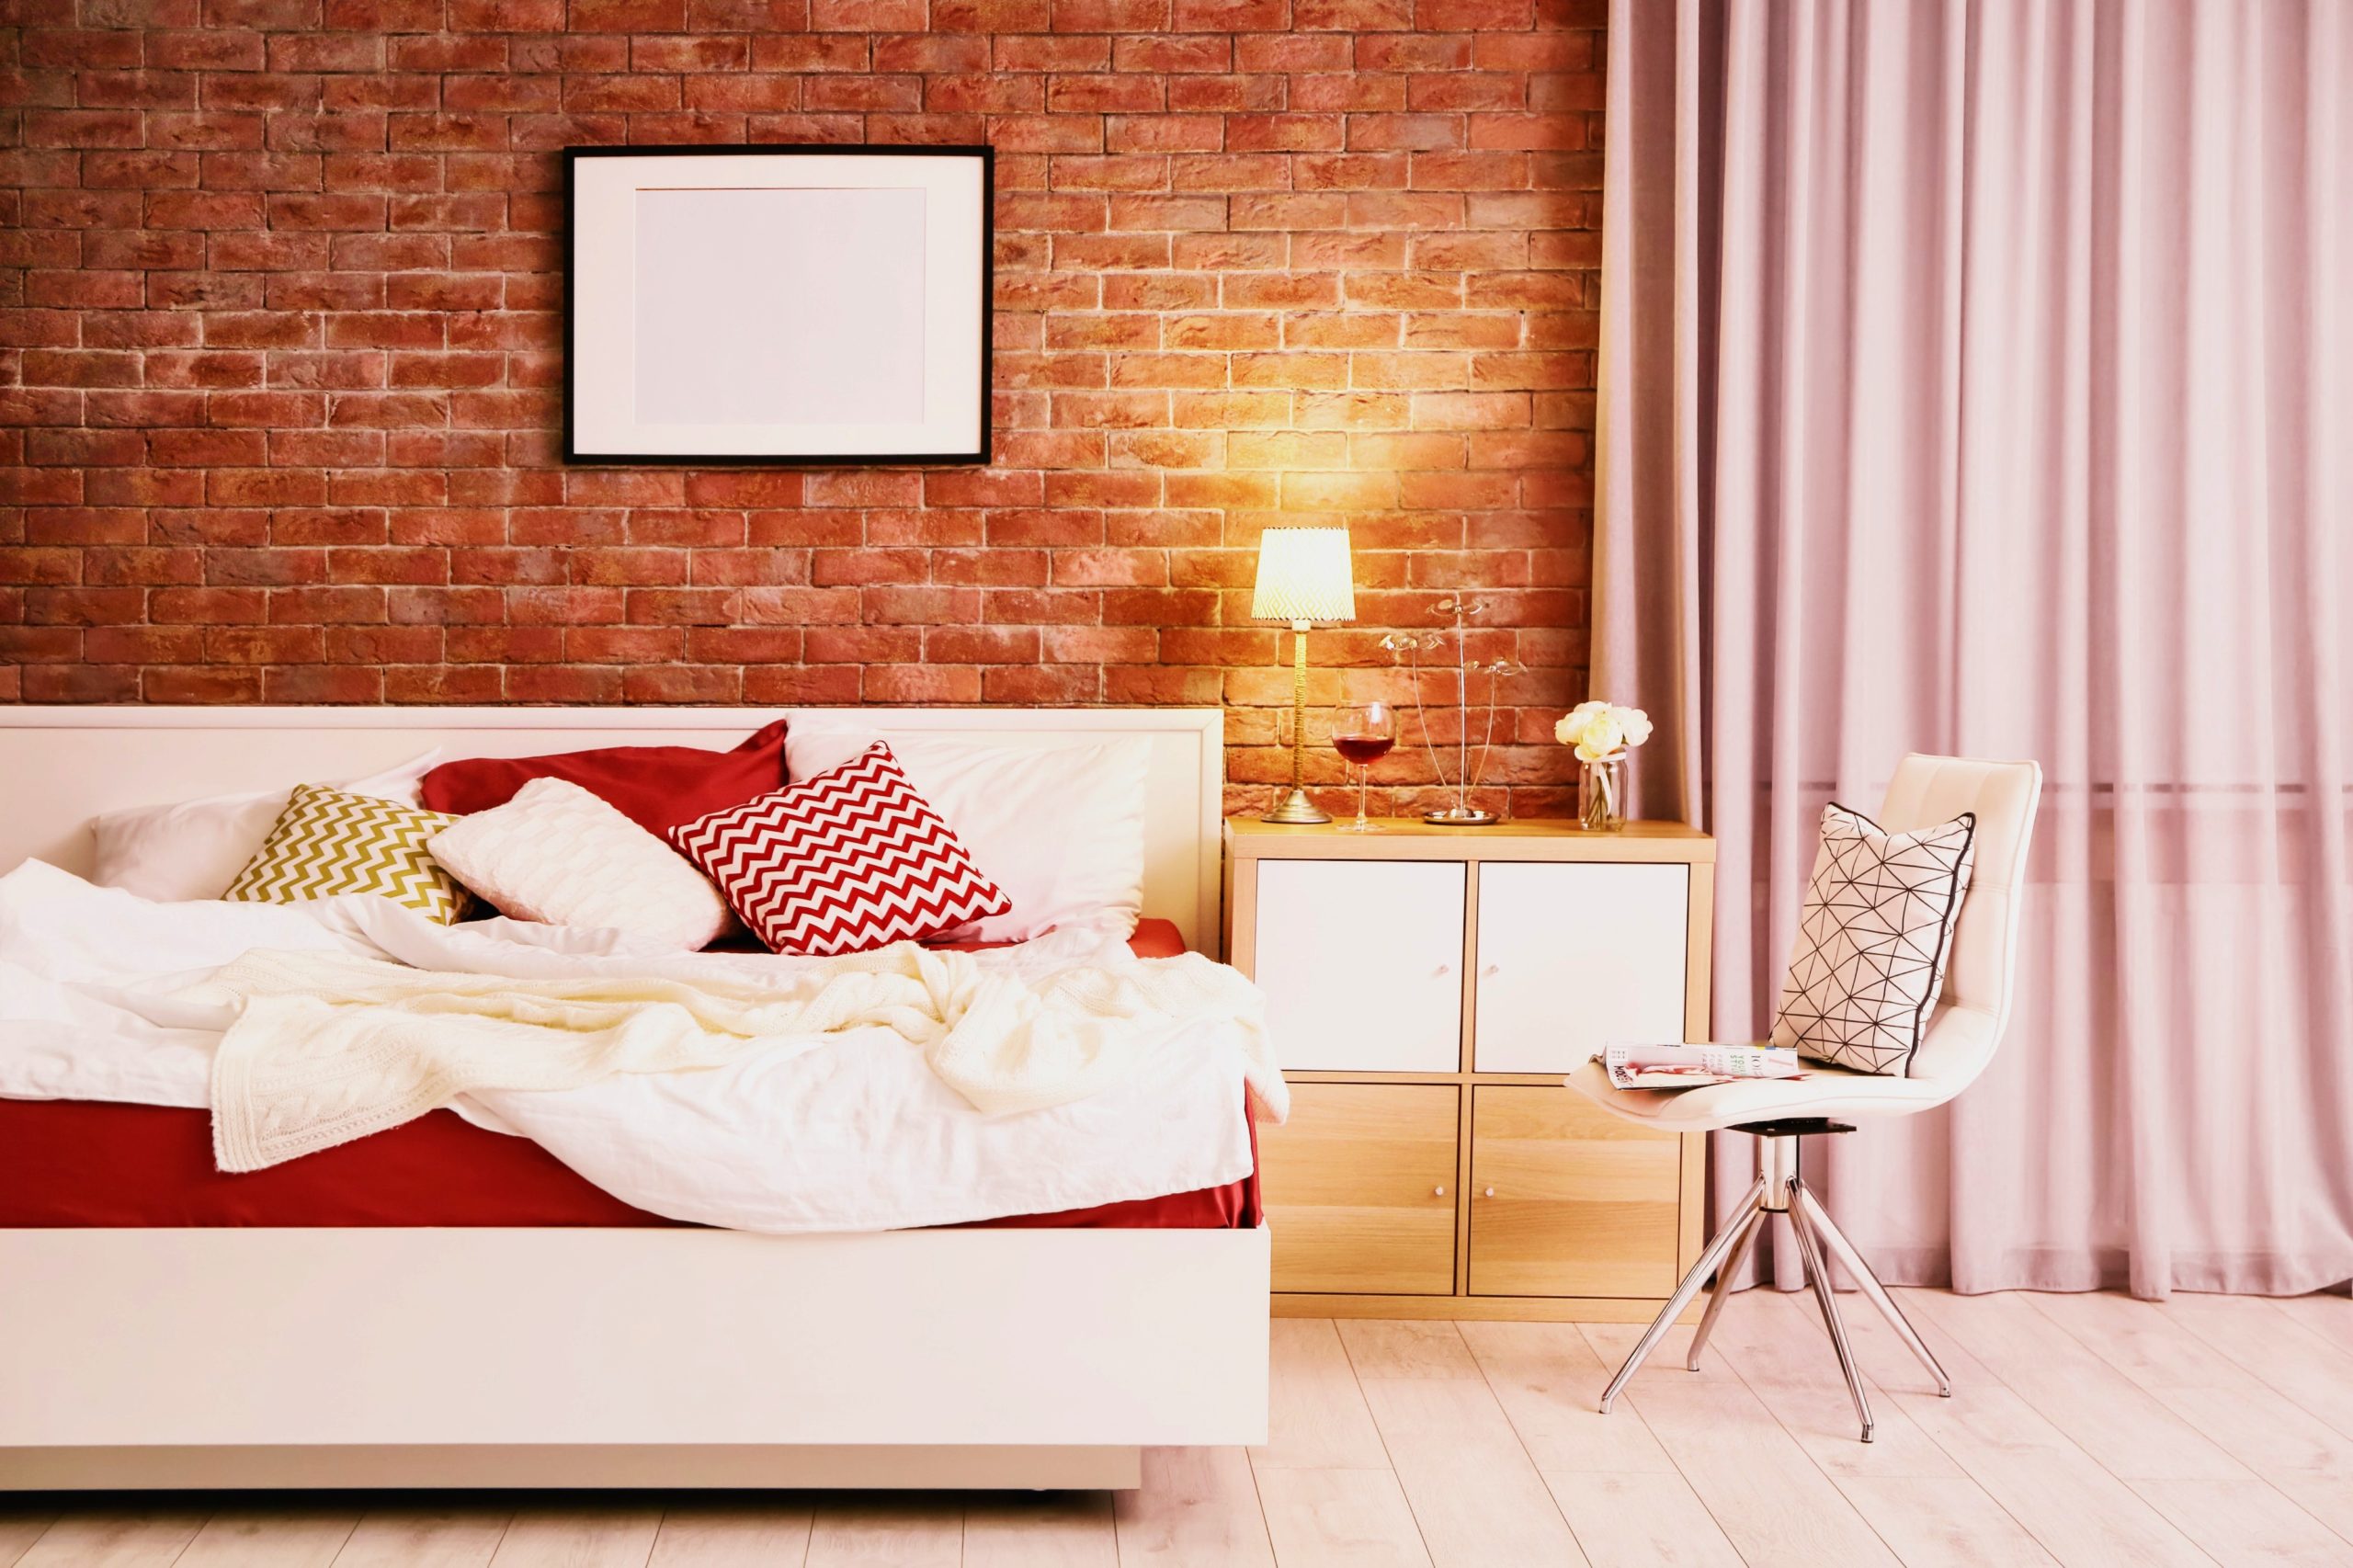 <img src="brick.jpg" alt="brick bedroom with white divan bed"/> 